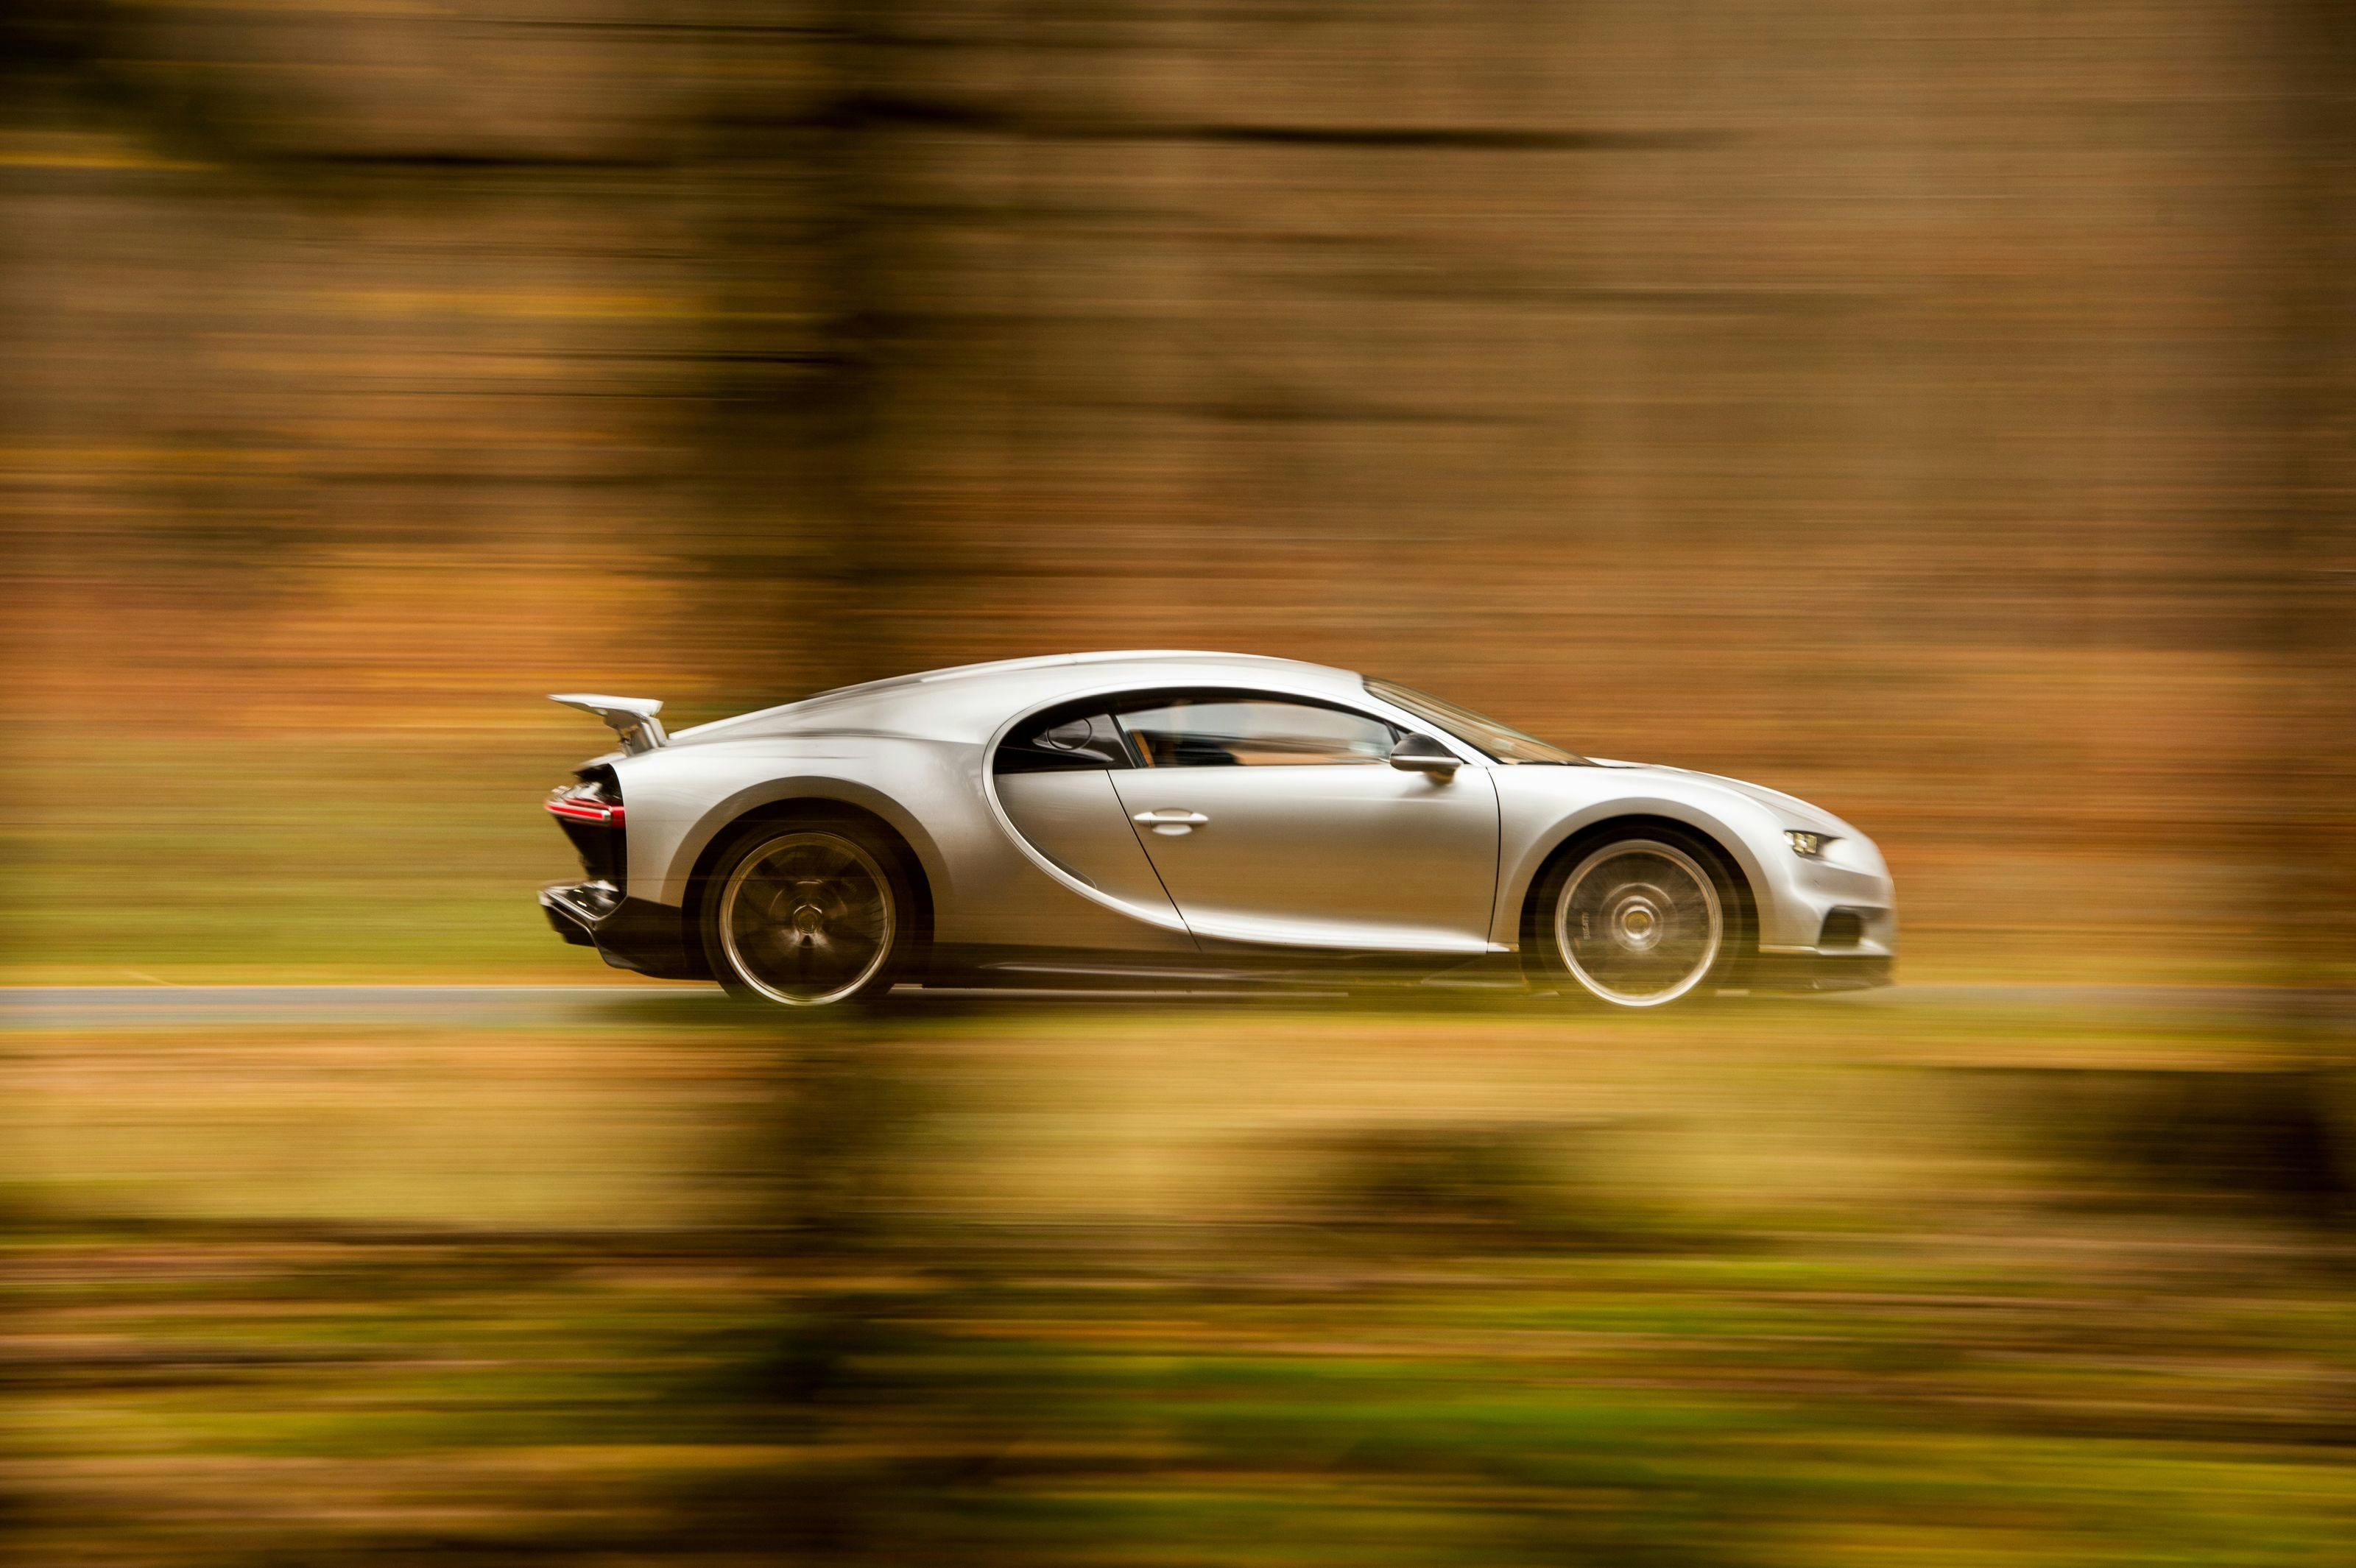 evo Magazine UK wählt Bugatti Chiron zum „Hypercar of the Year”